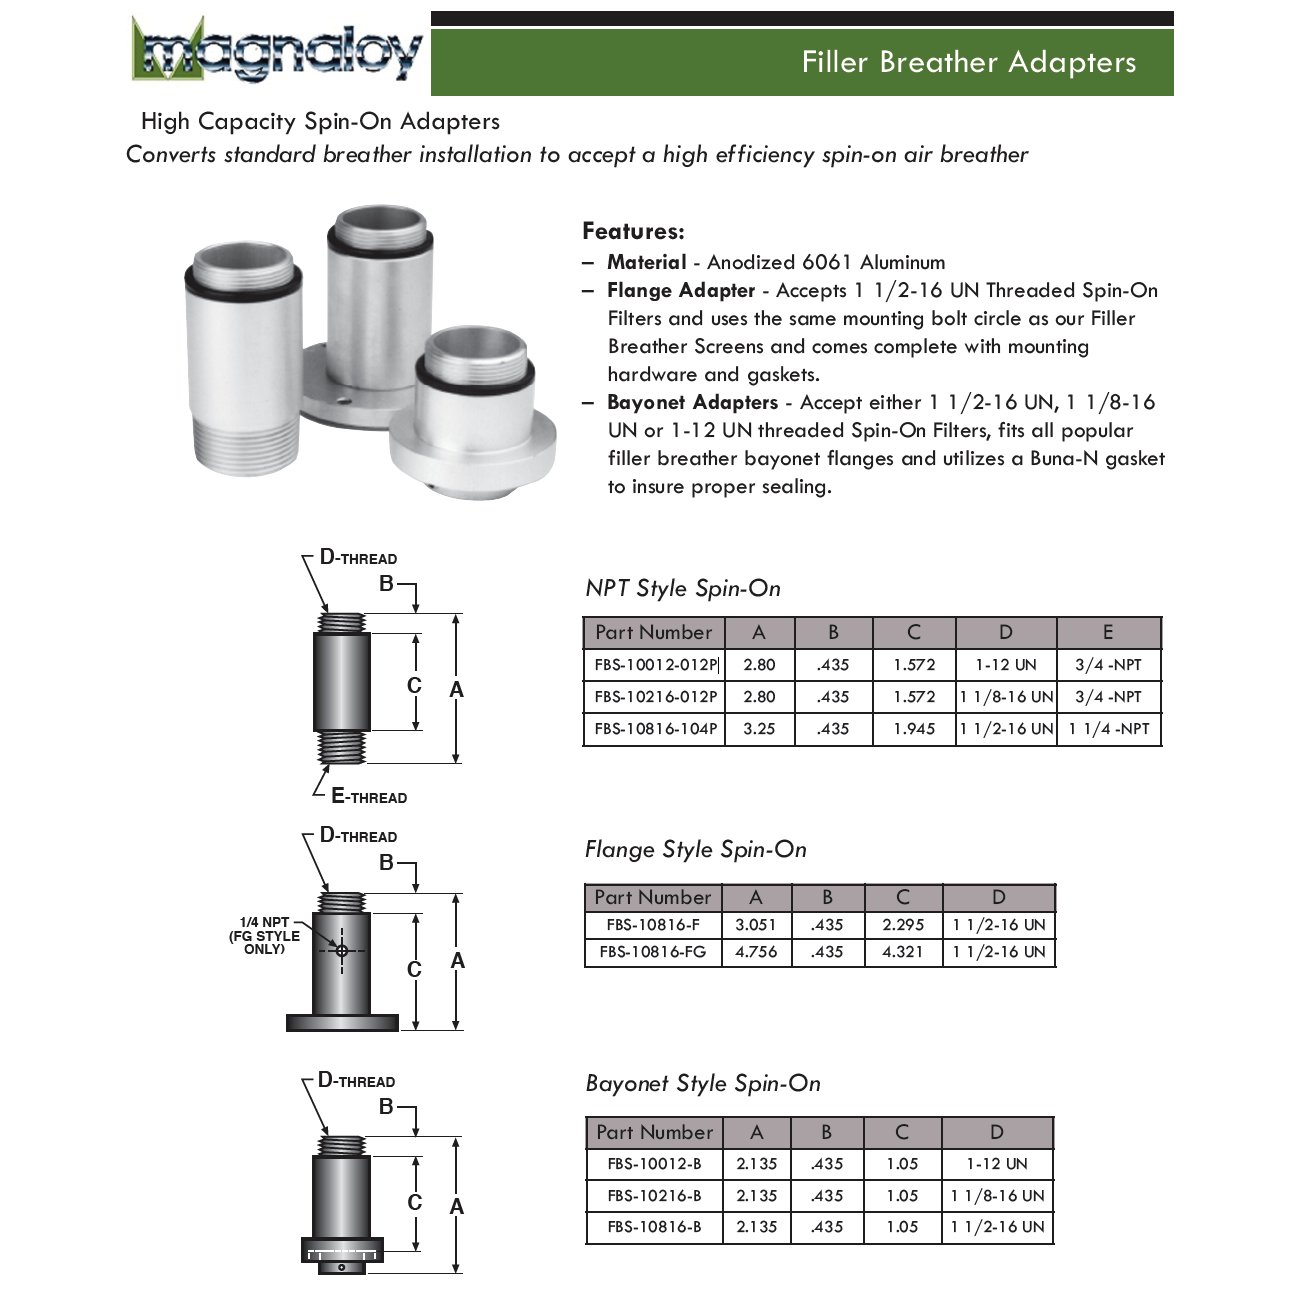 FBS-10816-104P : Magnaloy Spin-On NPT Adapter, Aluminum, 1 1/2-16 UN to 1.25" NPT